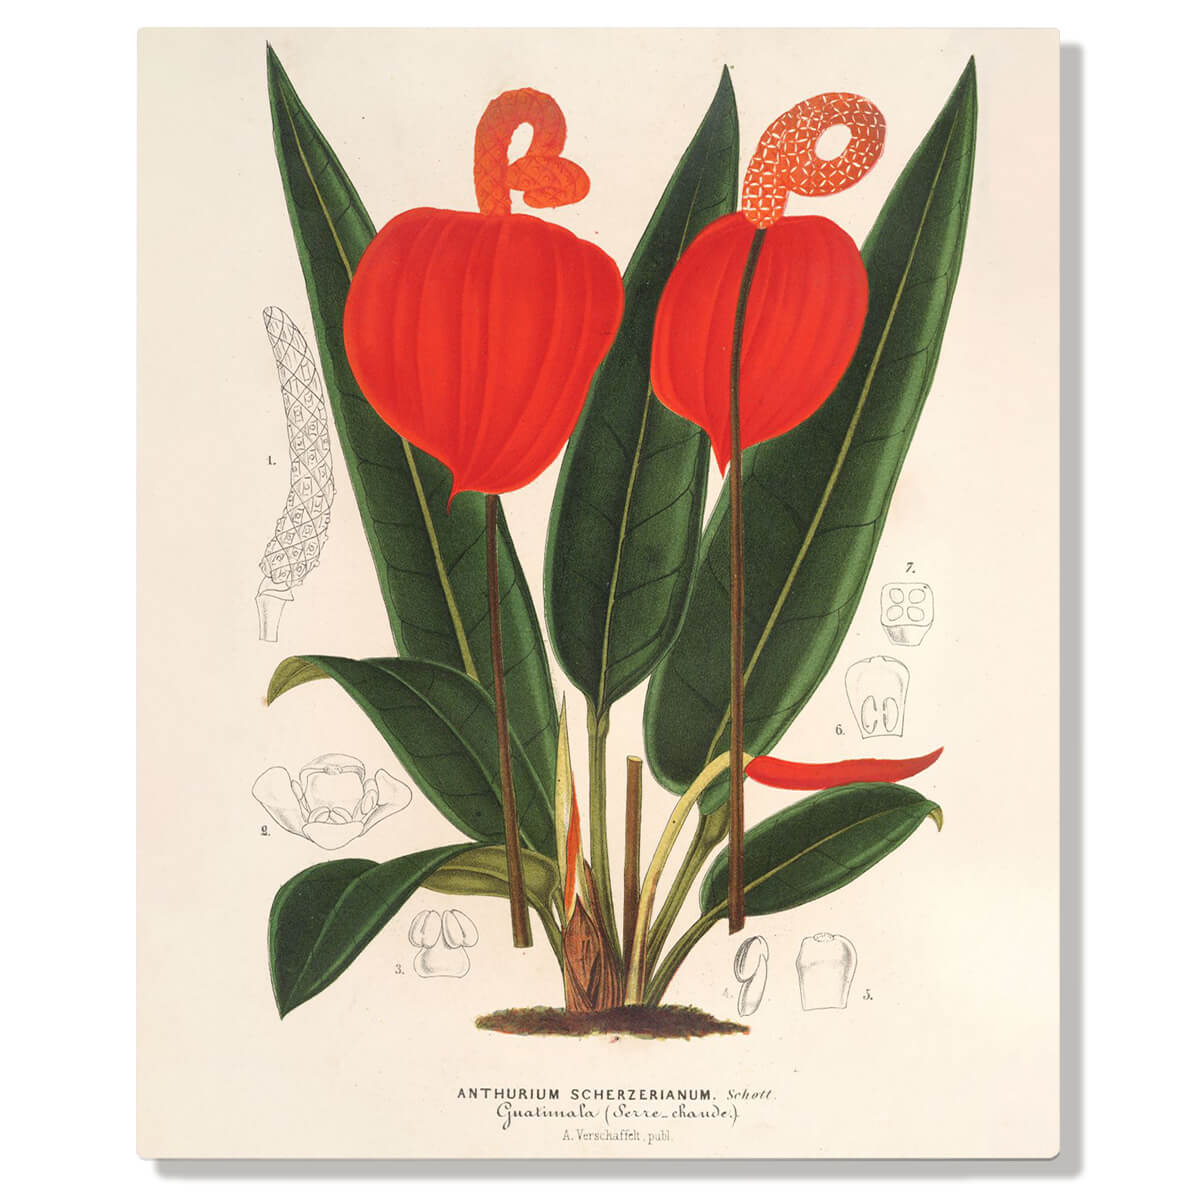 A vintage artwork featuring vibrant red anthurium flowers